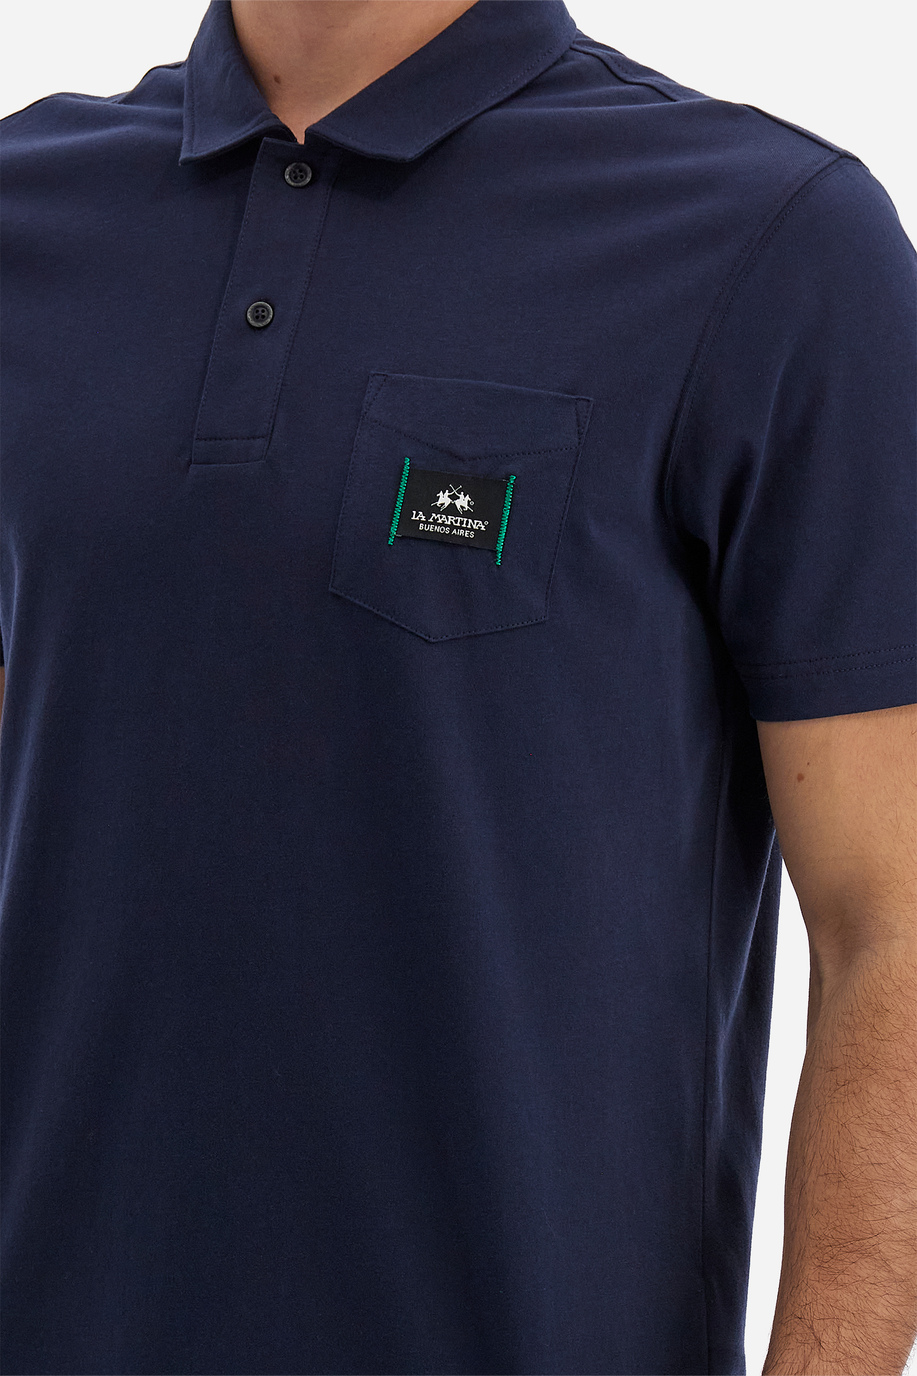 Herren-Kurzarm-Poloshirt Logos mit flacher Minitasche in Volltonfarbe - Vasant - Kurzarm | La Martina - Official Online Shop